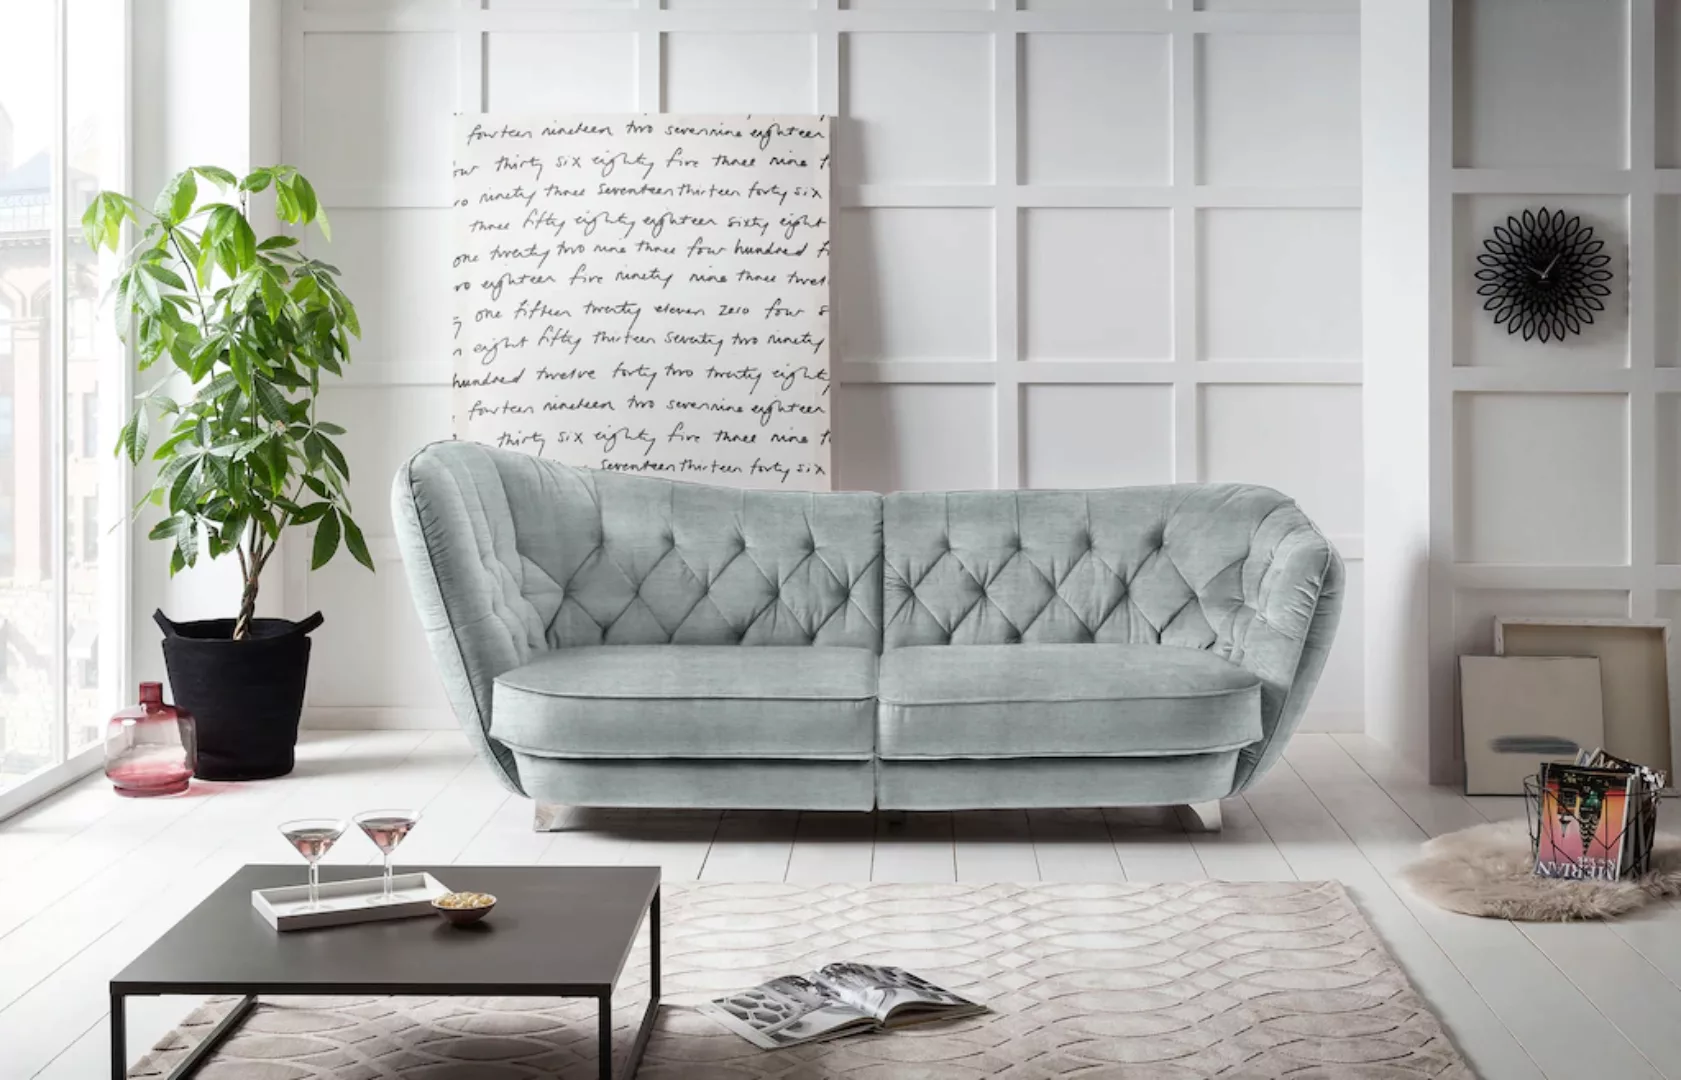 Leonique Big-Sofa "Retro" günstig online kaufen